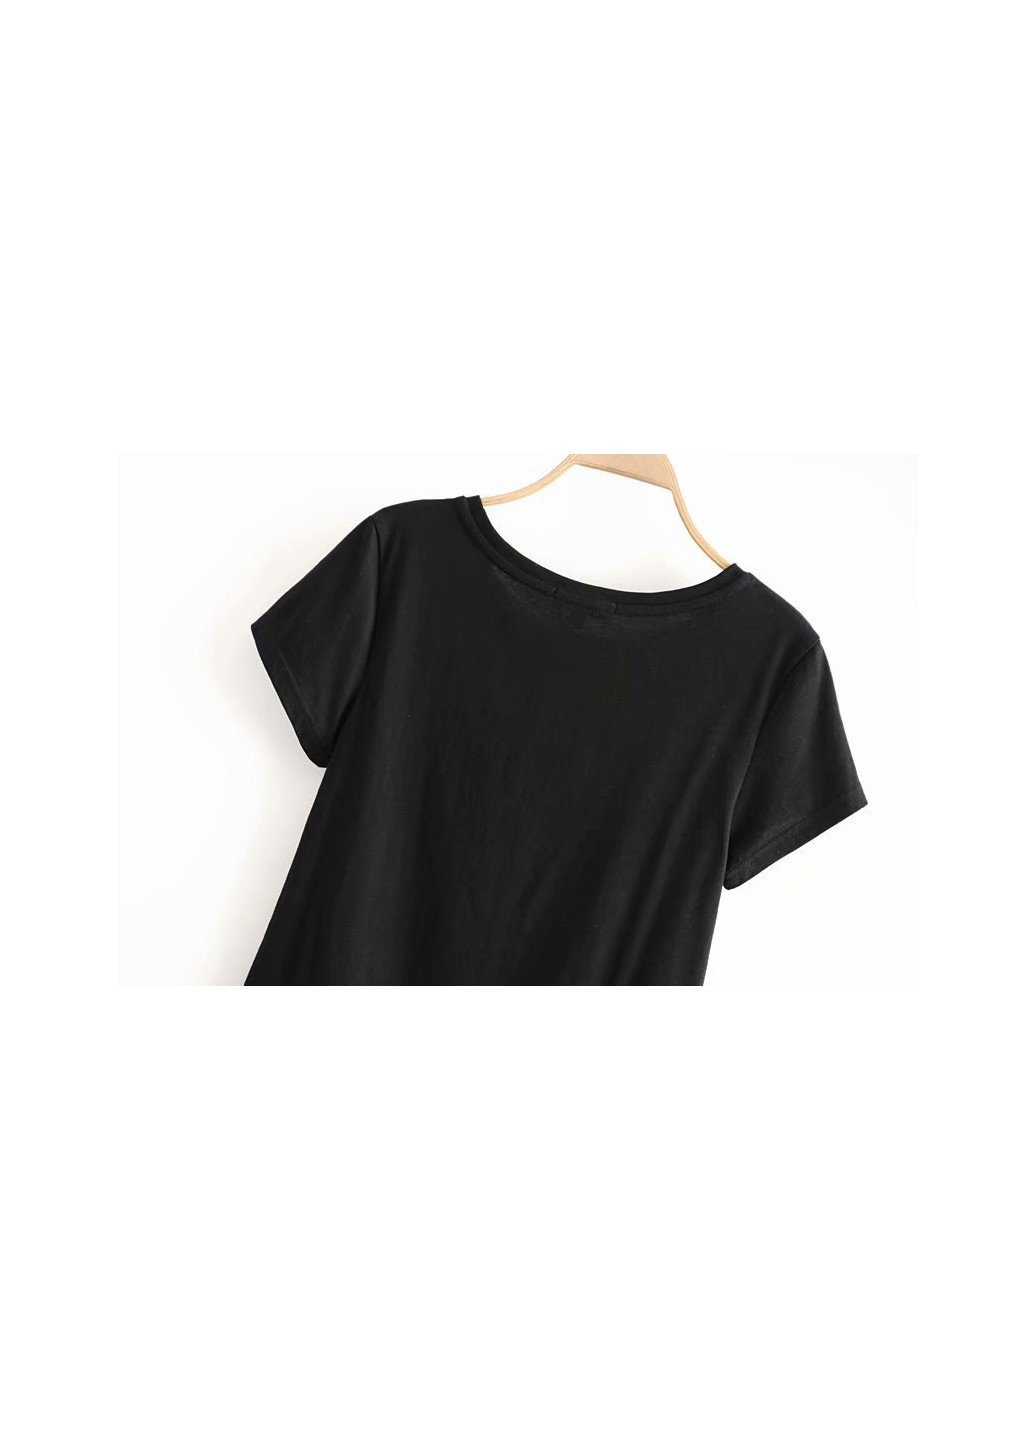 Черная летняя футболка женская el romance Berni Fashion WF-1363